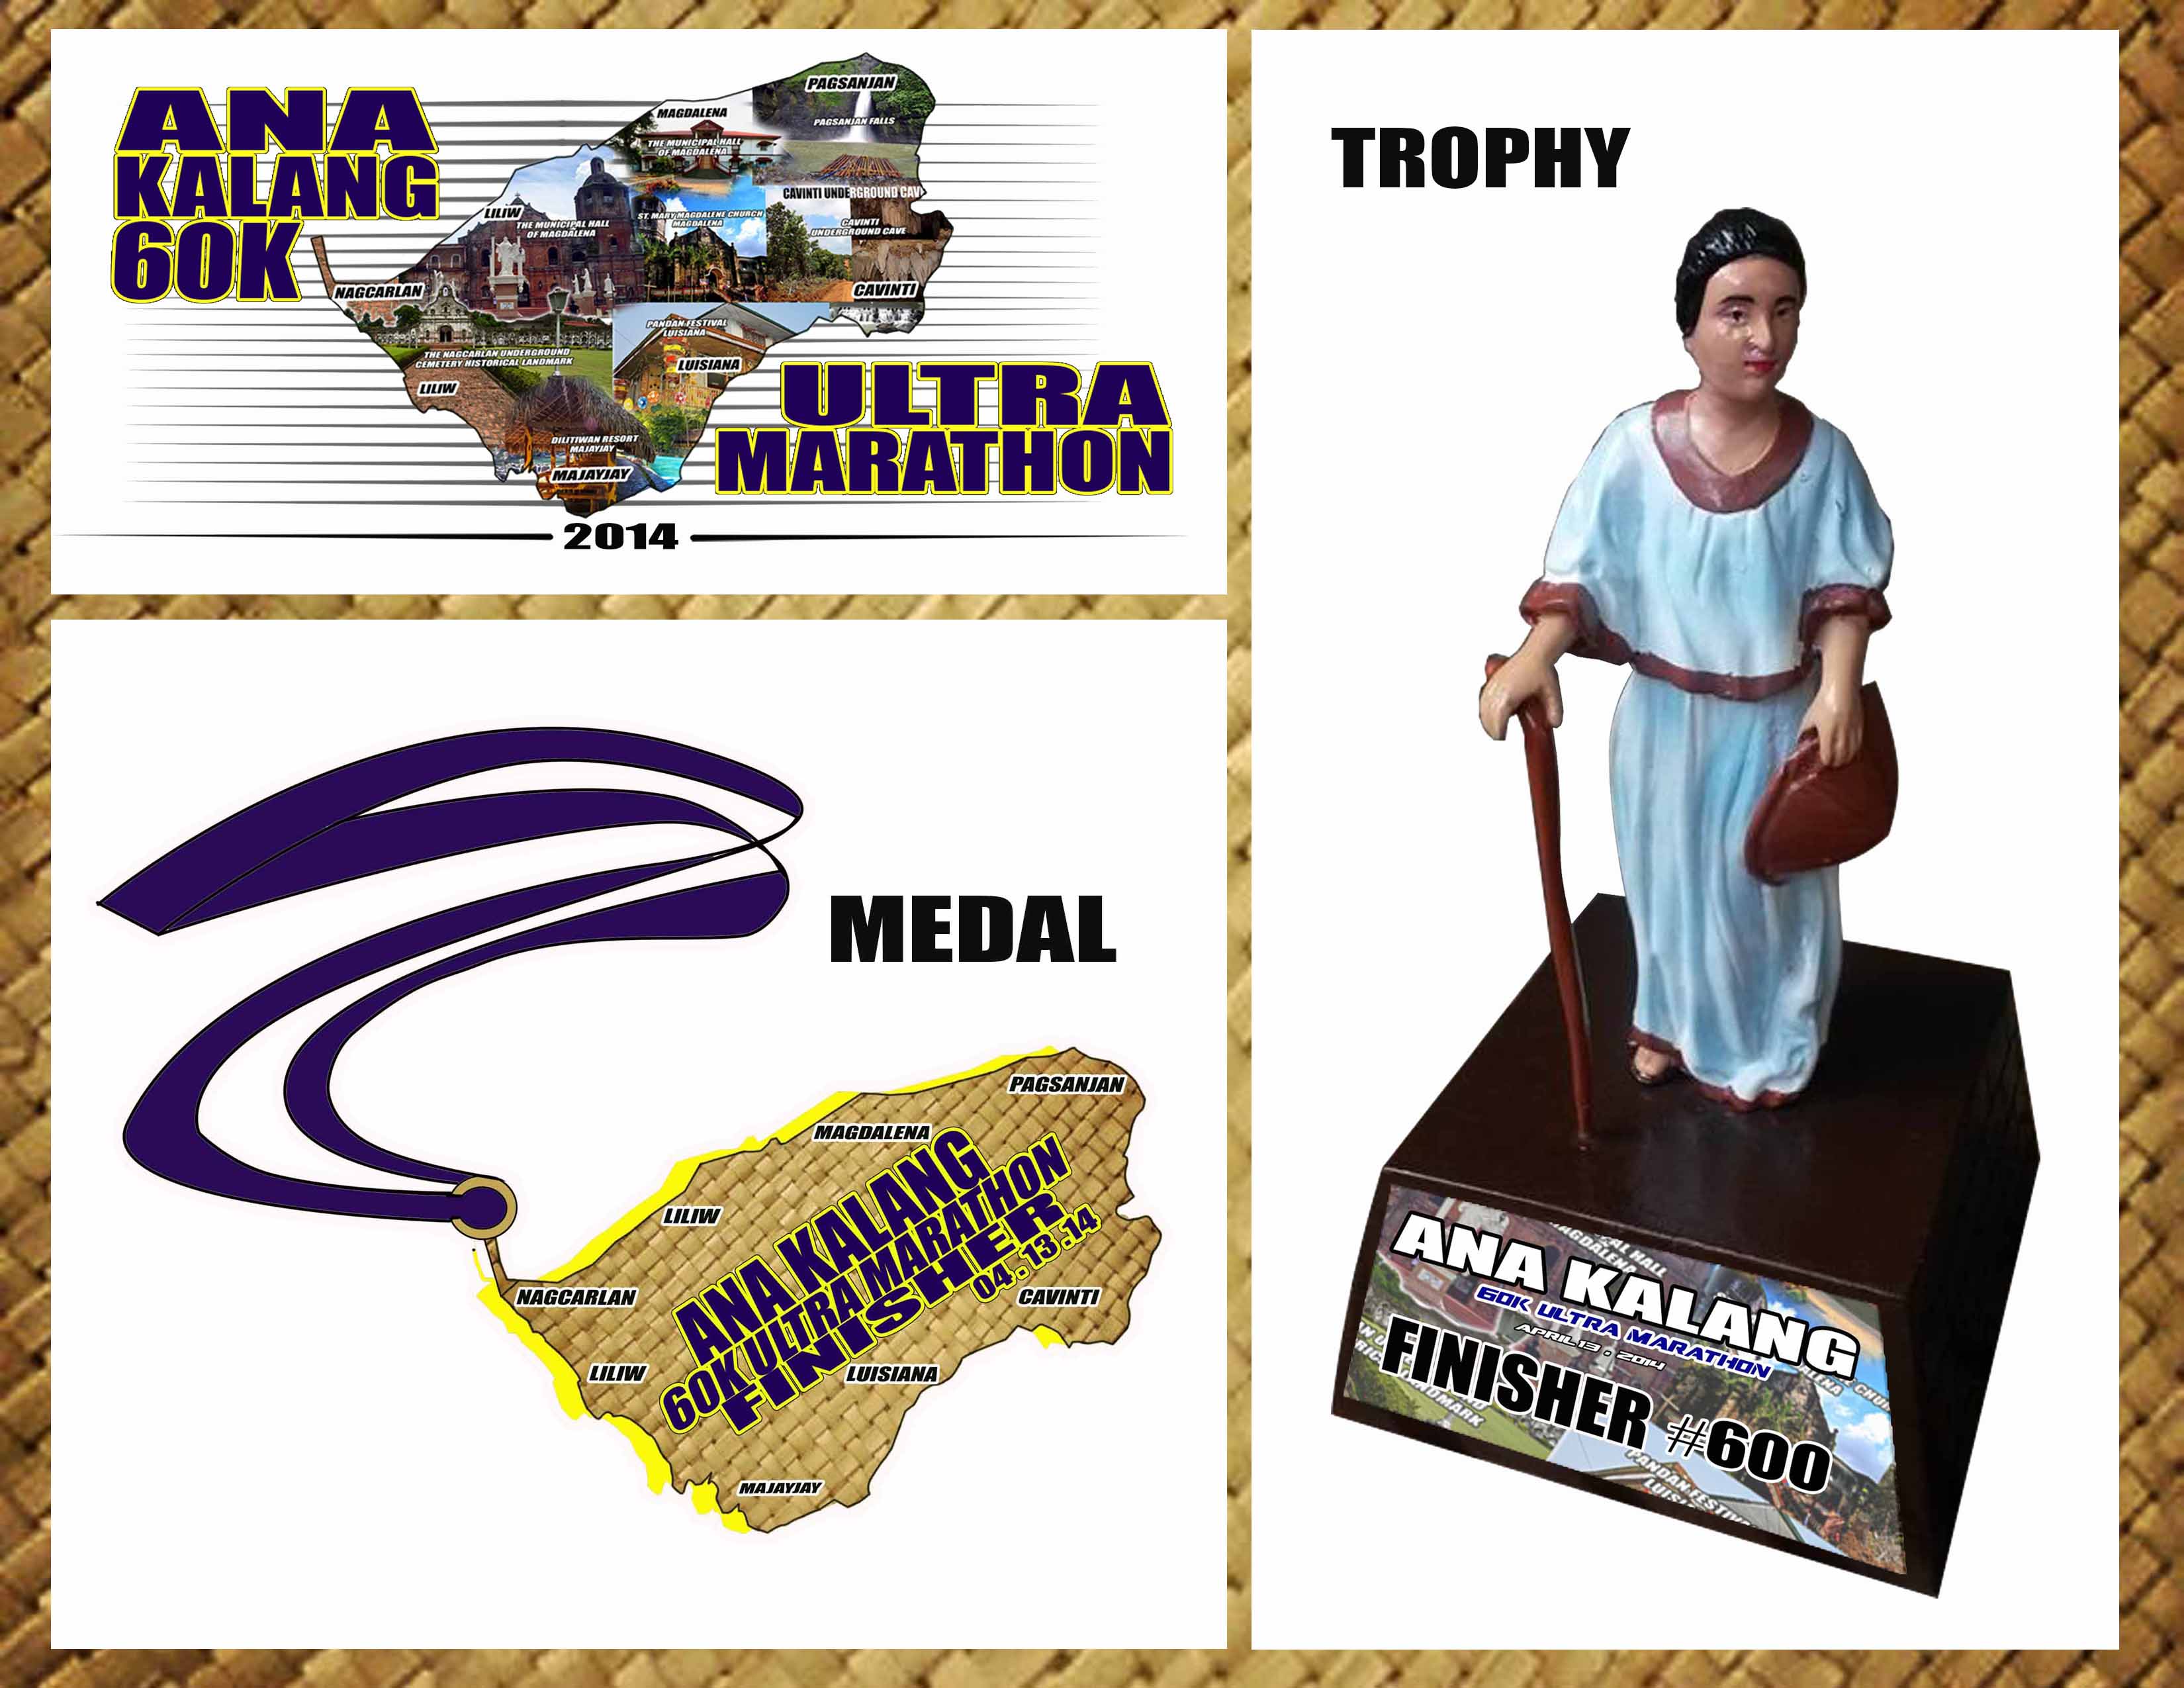 ana-kalang -60K-ultra-marathon-2014-medal-trophy